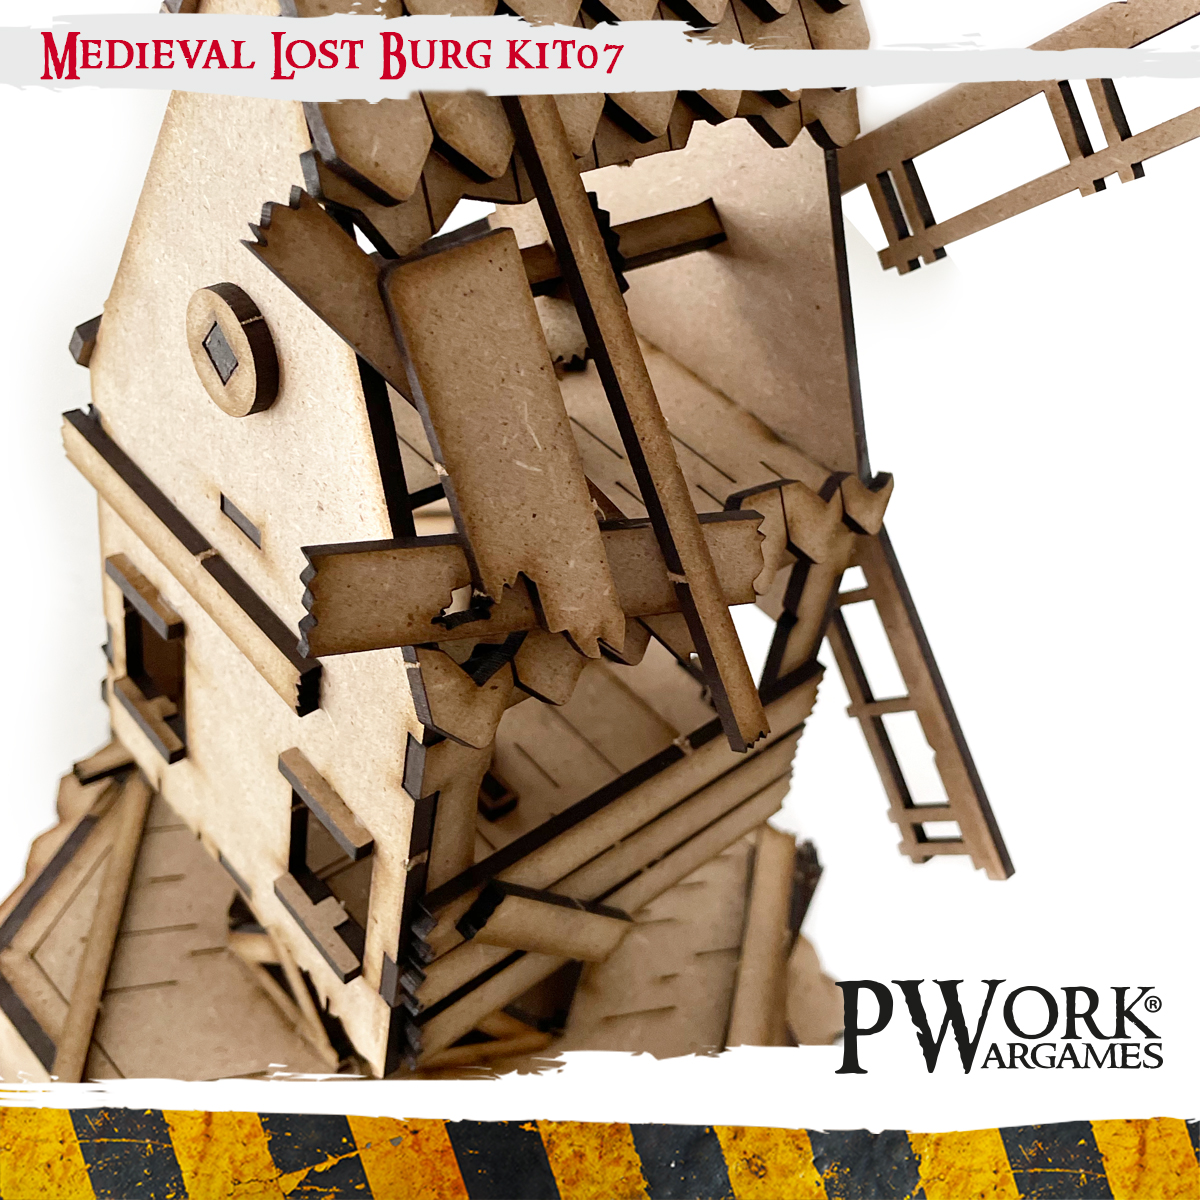 Medieval Lostburg Mill Interior - PWork Wargames